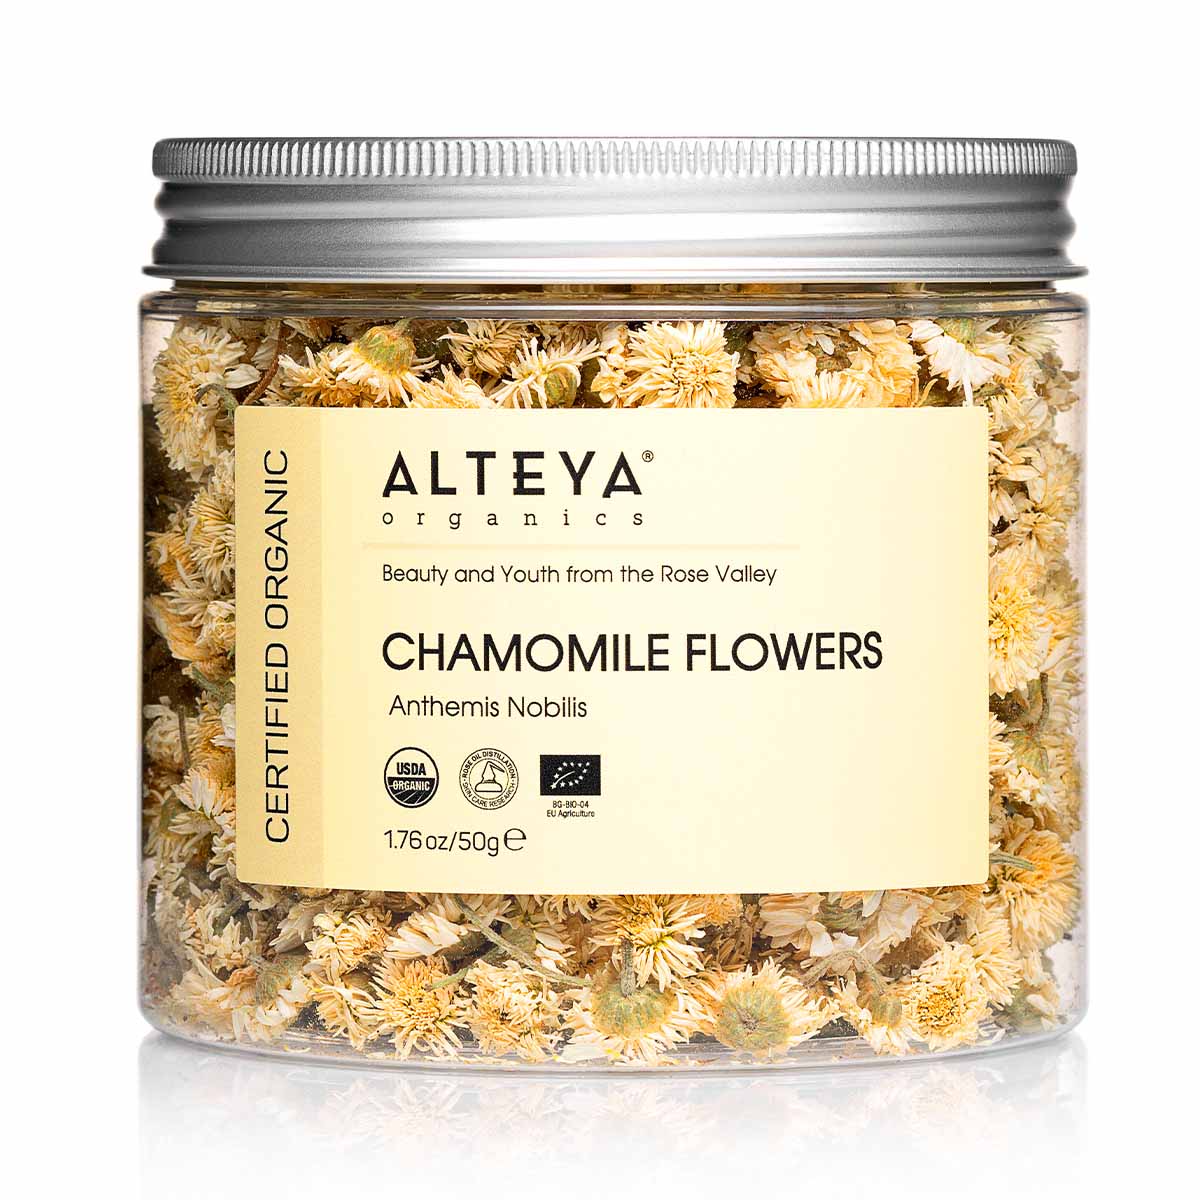 A jar of Alteya Organics Chamomile Flowers.